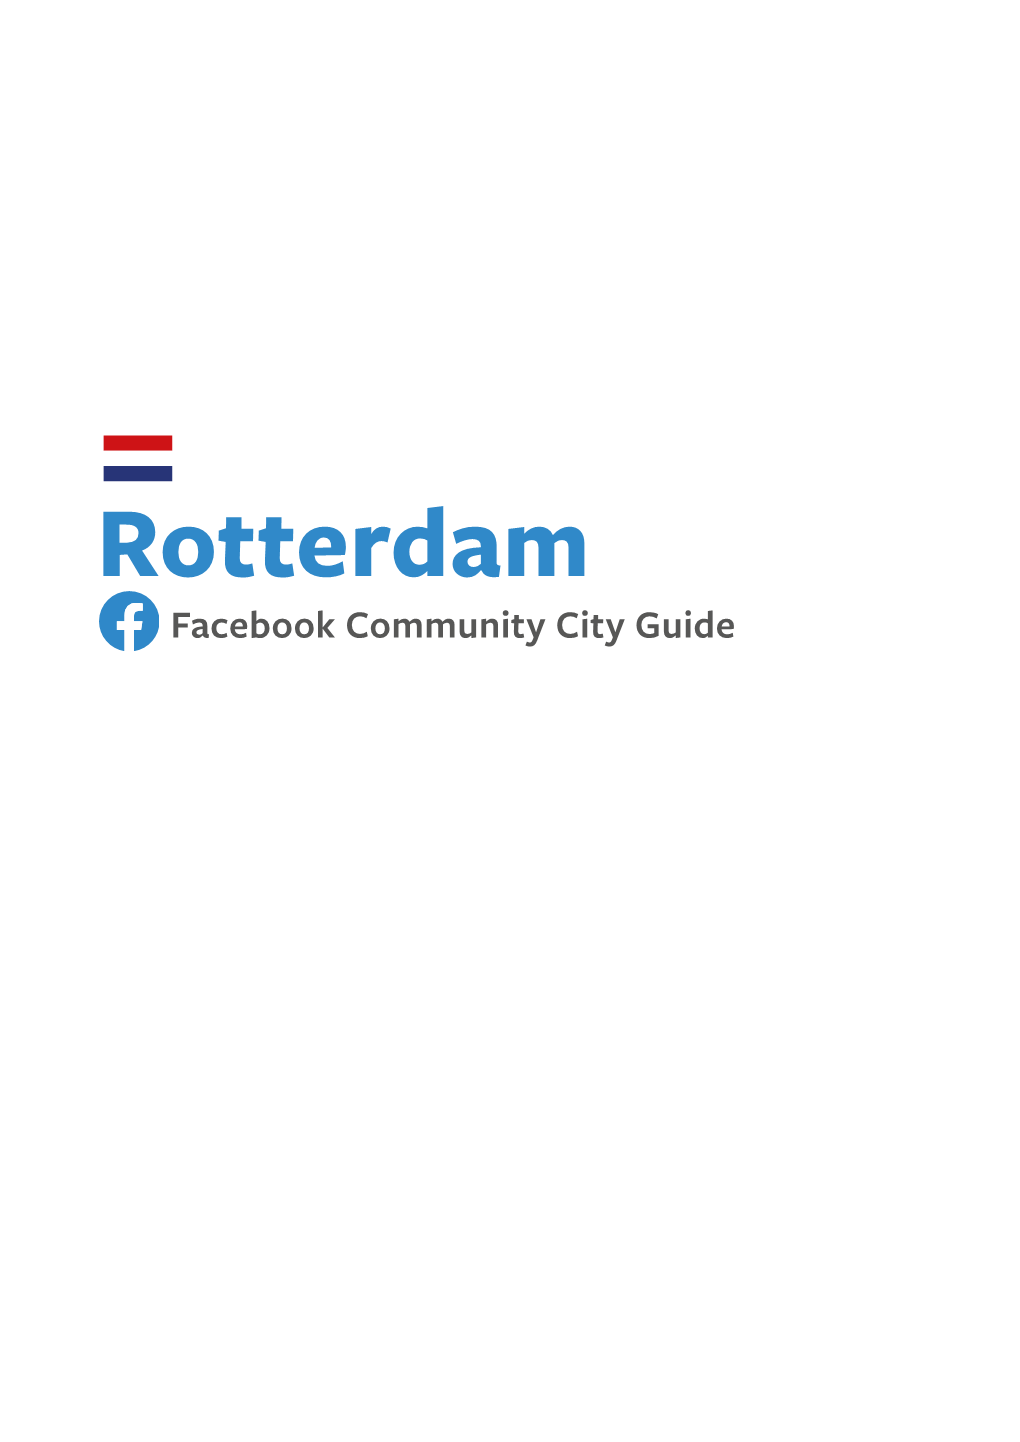 Rotterdam Facebook Community City Guide Intro